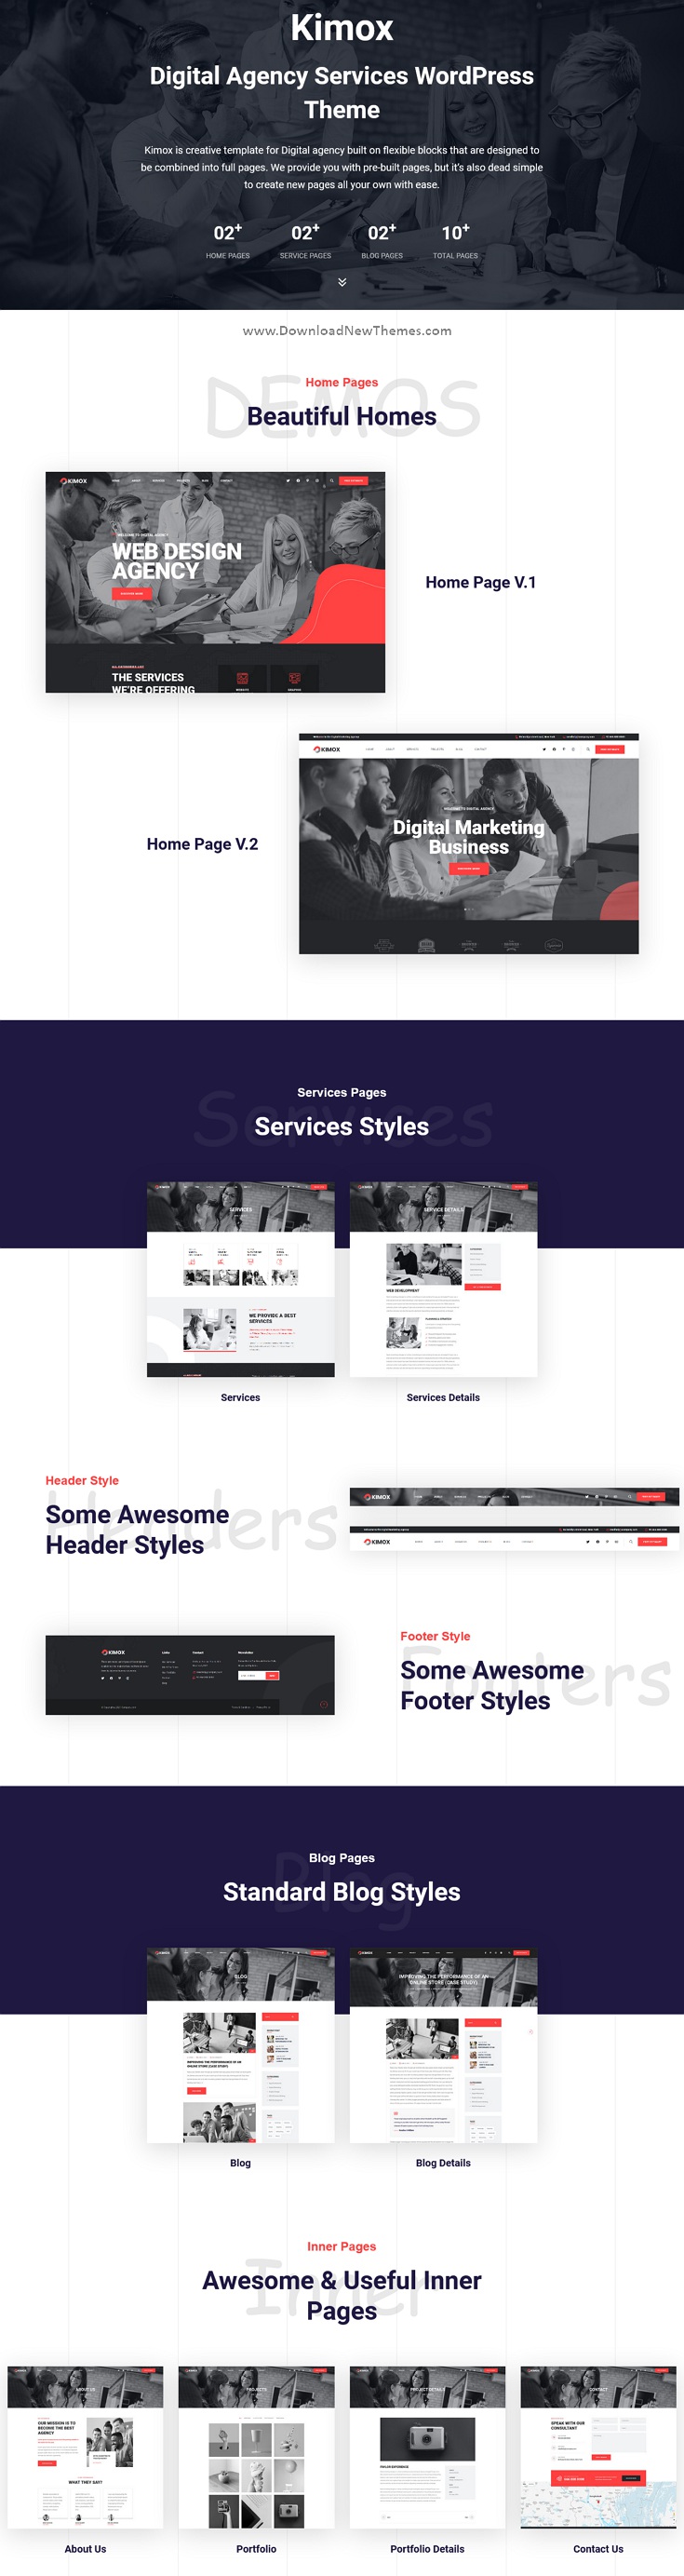 Kimox - Digital Agency Services WordPress Theme